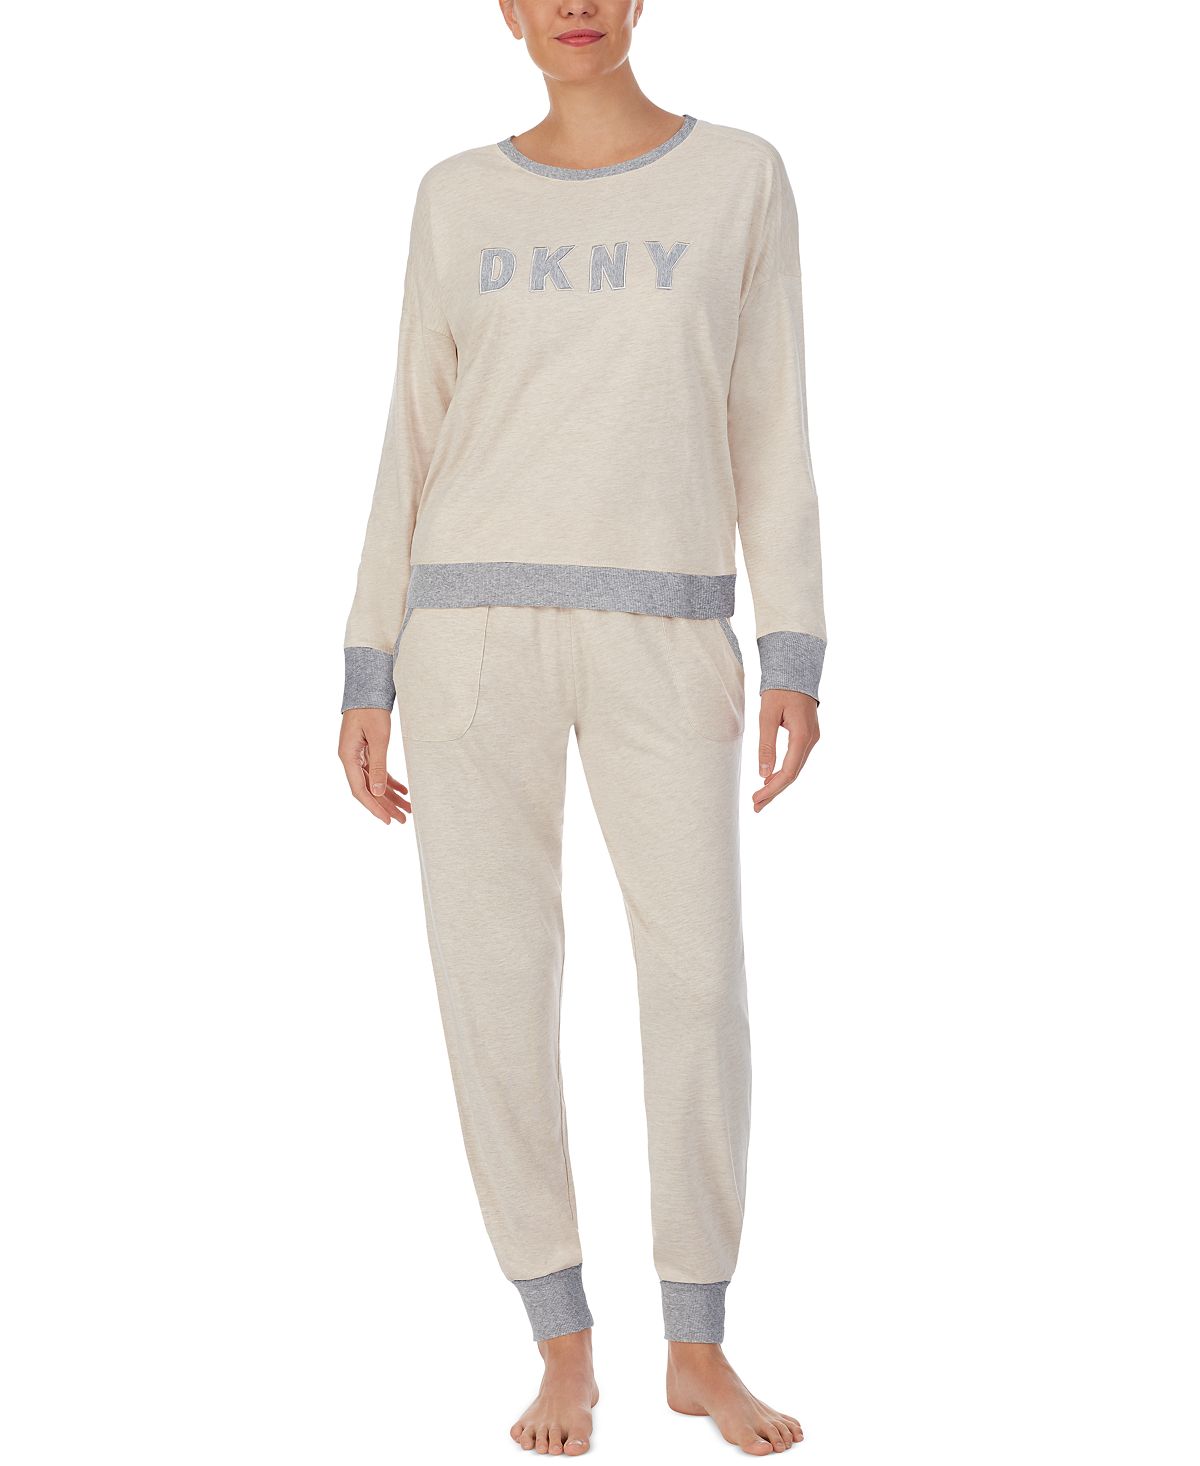 Dkny Embroidered Logo Top & Jogger Pants Pajamas Set Oatmeal